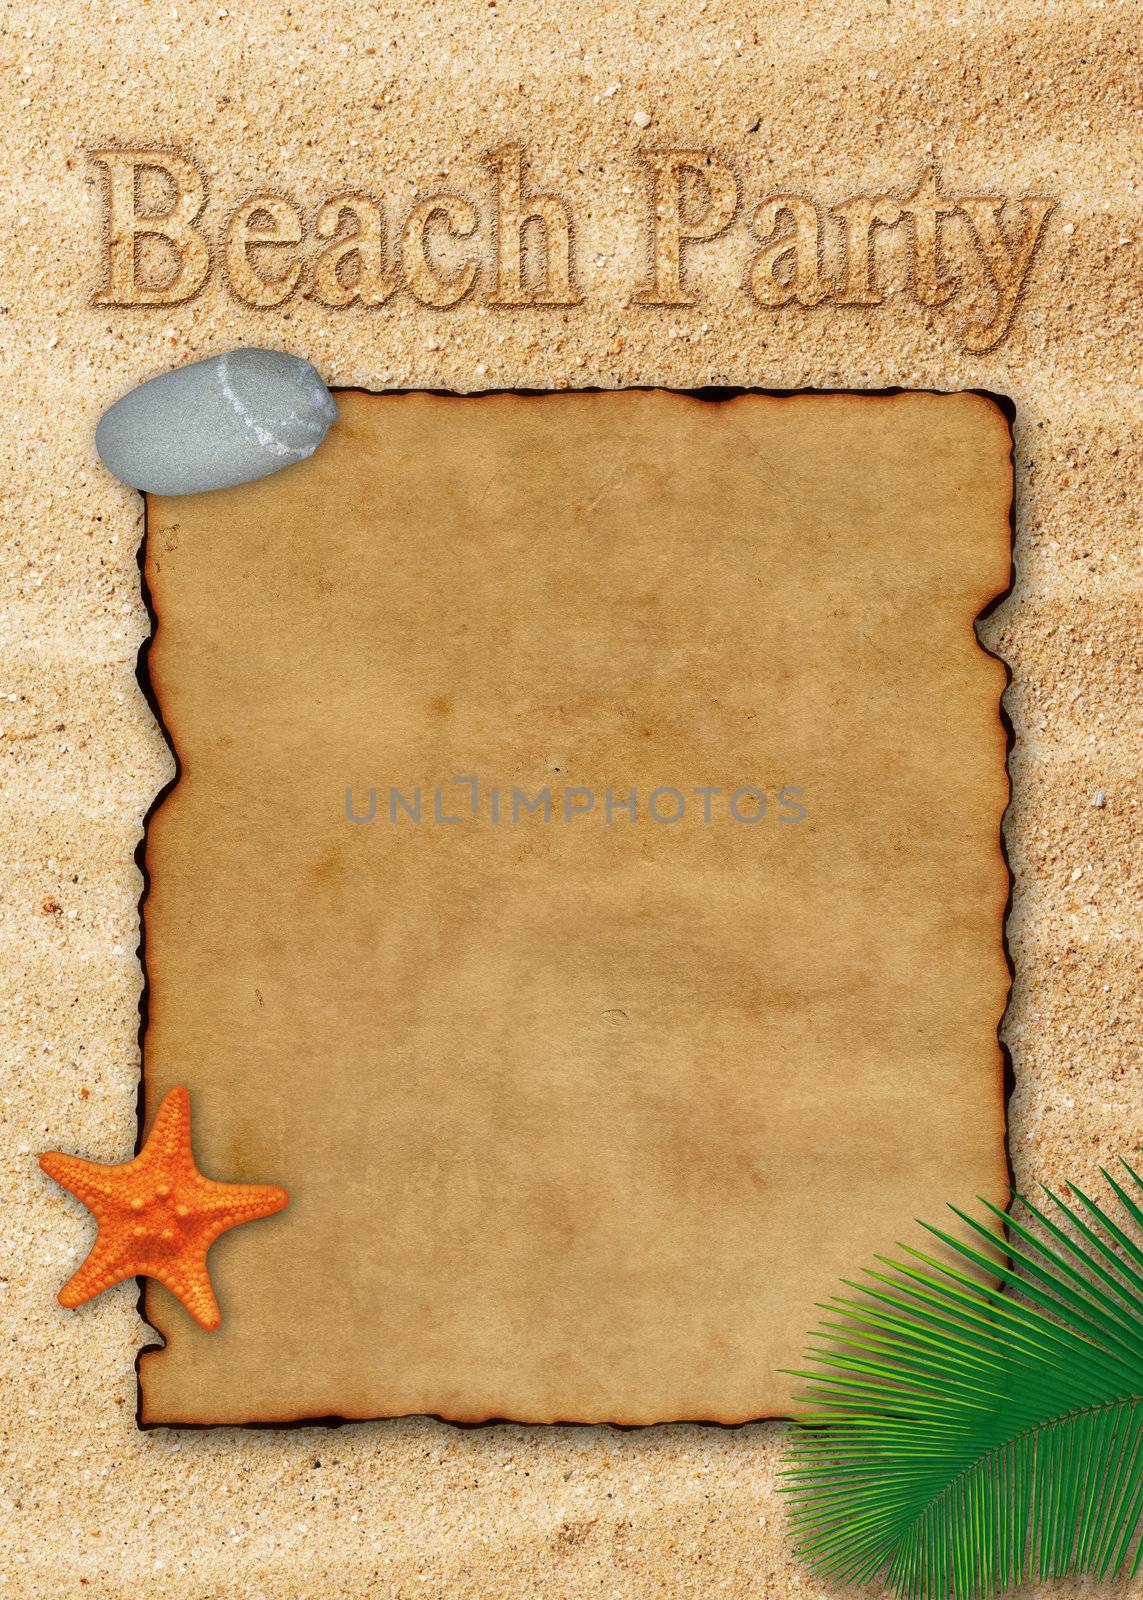 Beach Party Illustration by SorayaShan